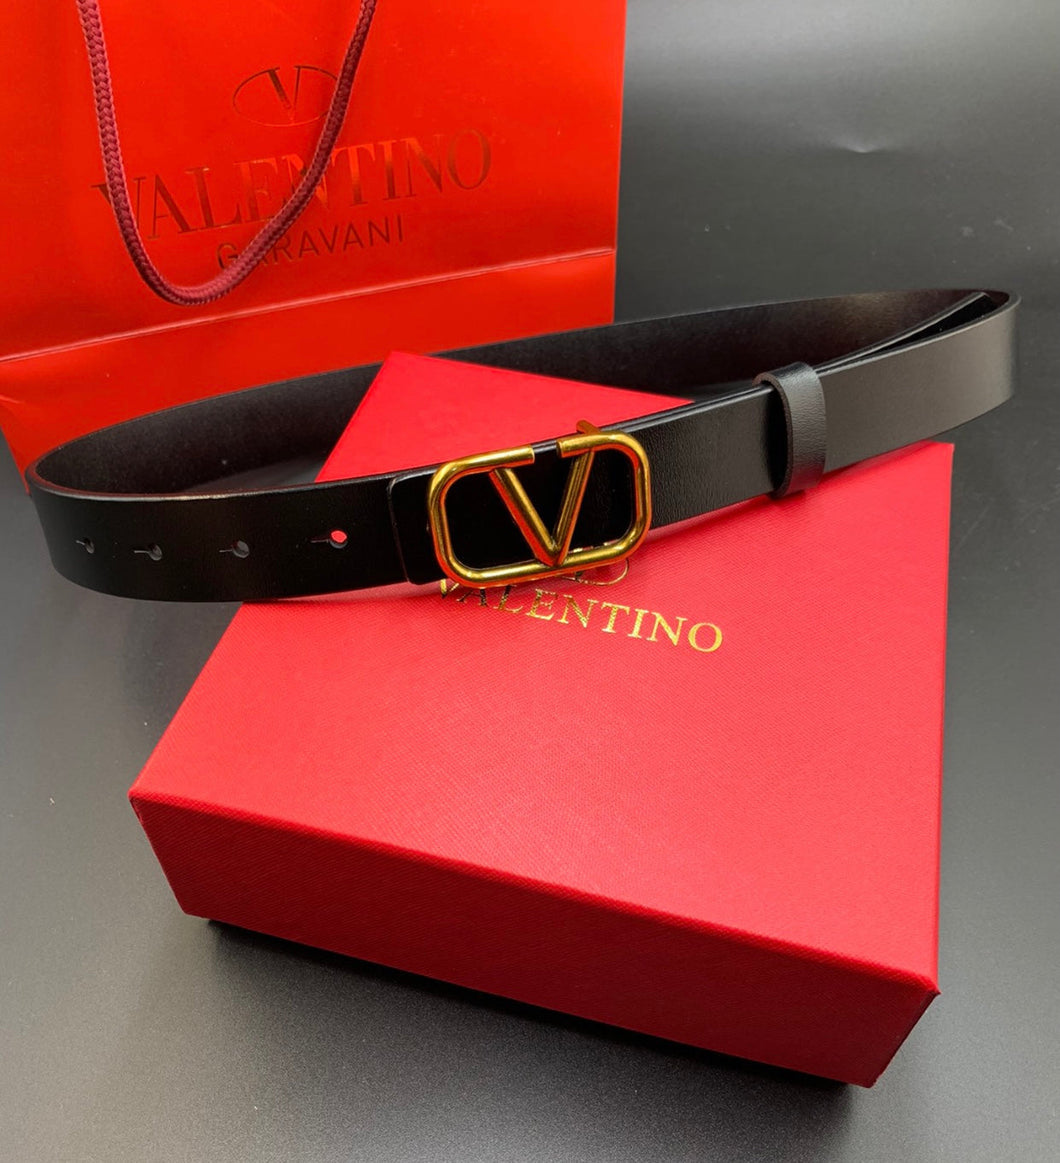 Valentino belt